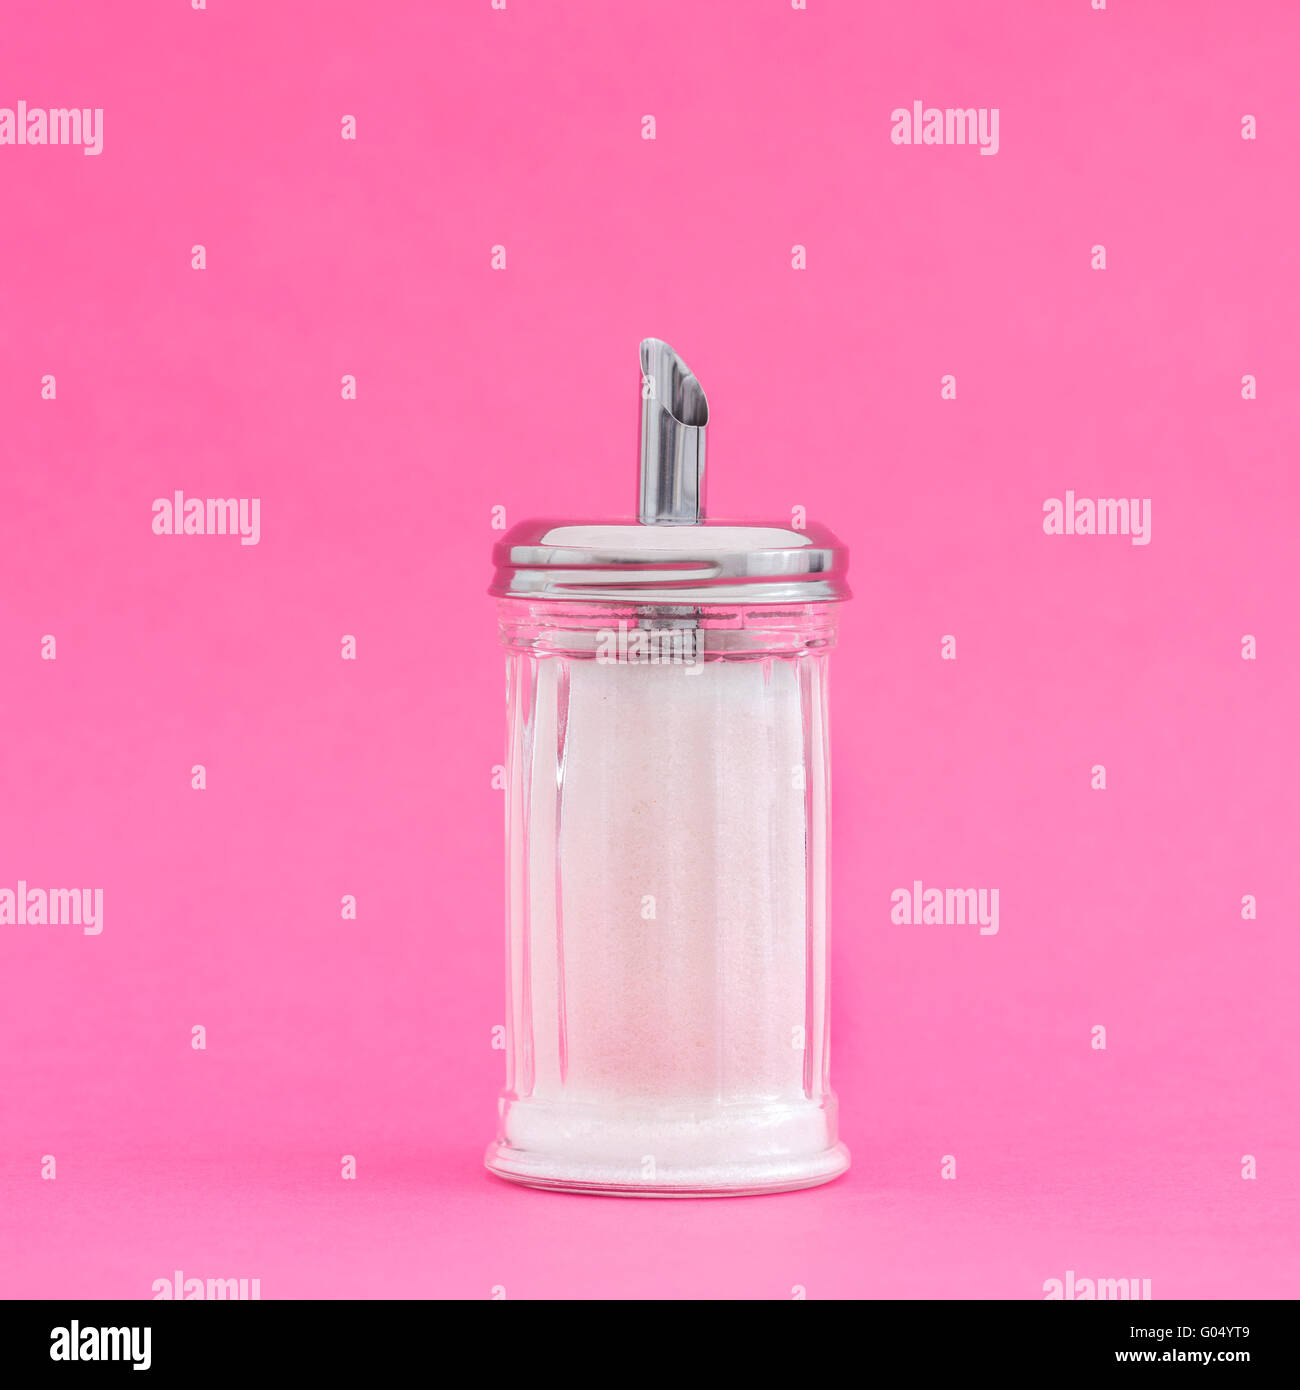 Full Sugar dispenser on pink background Stock Photo